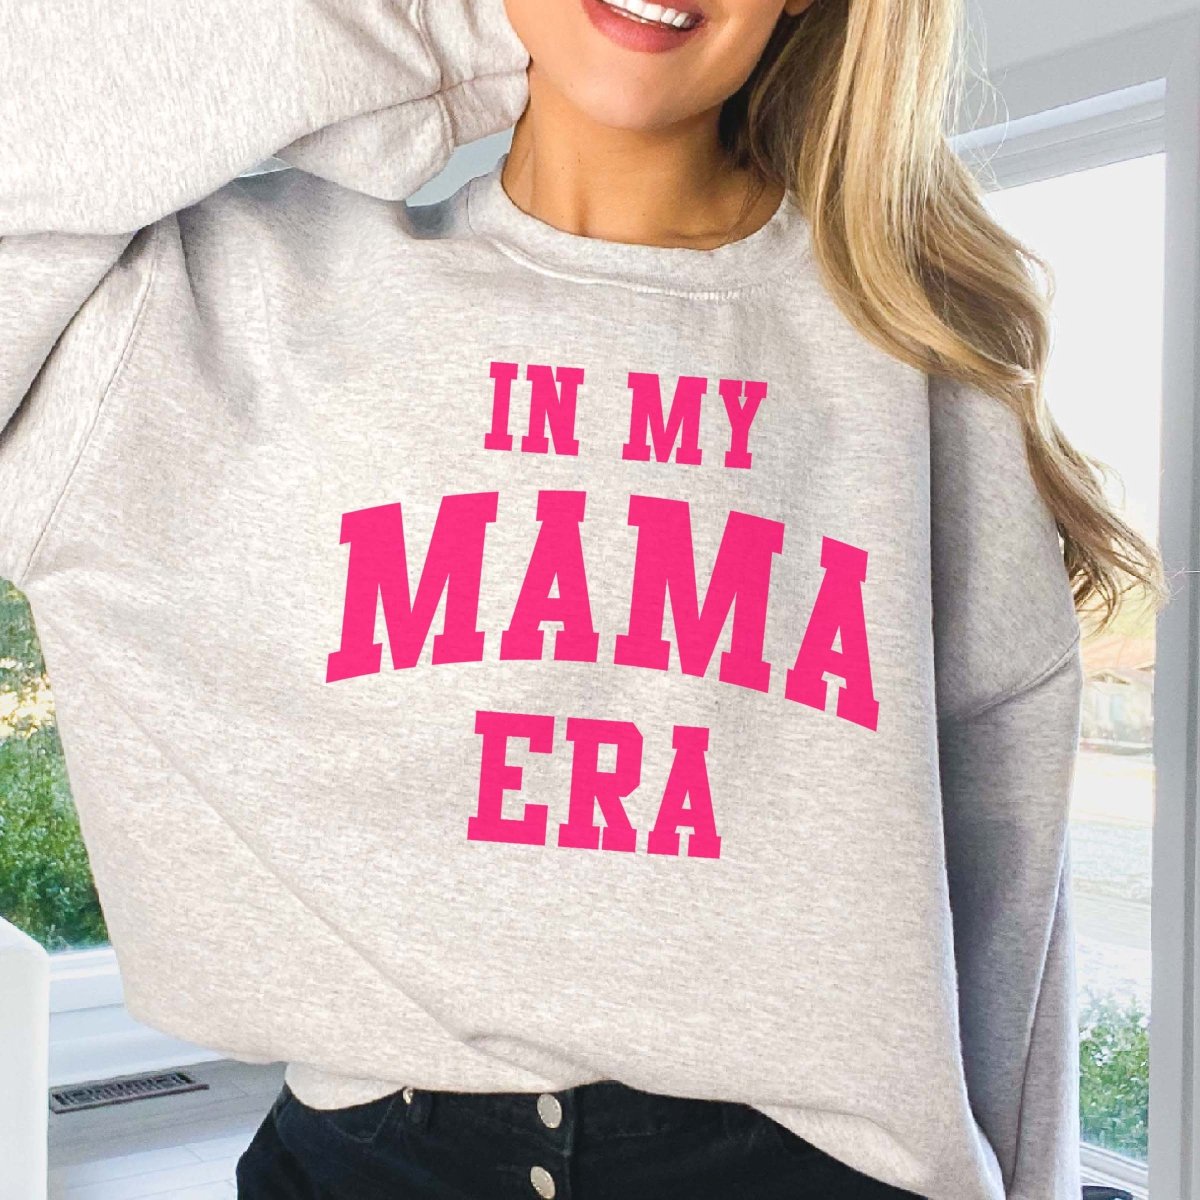 Mama Era Crew - Limeberry Designs